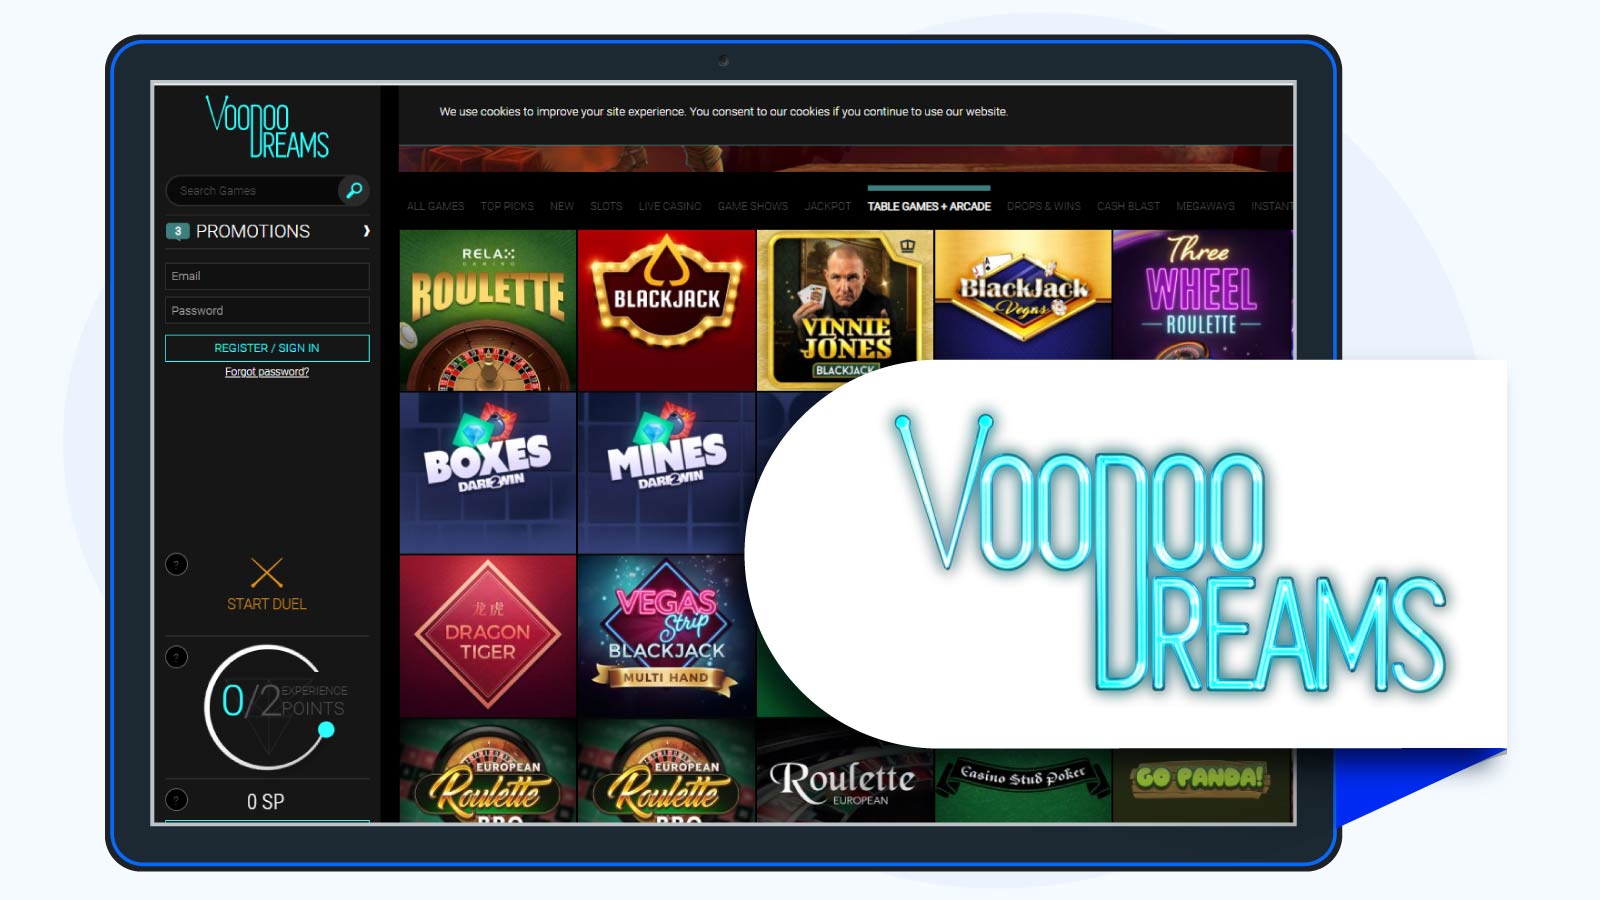 VoodooDreams – Trending casino site for craps with low house edge